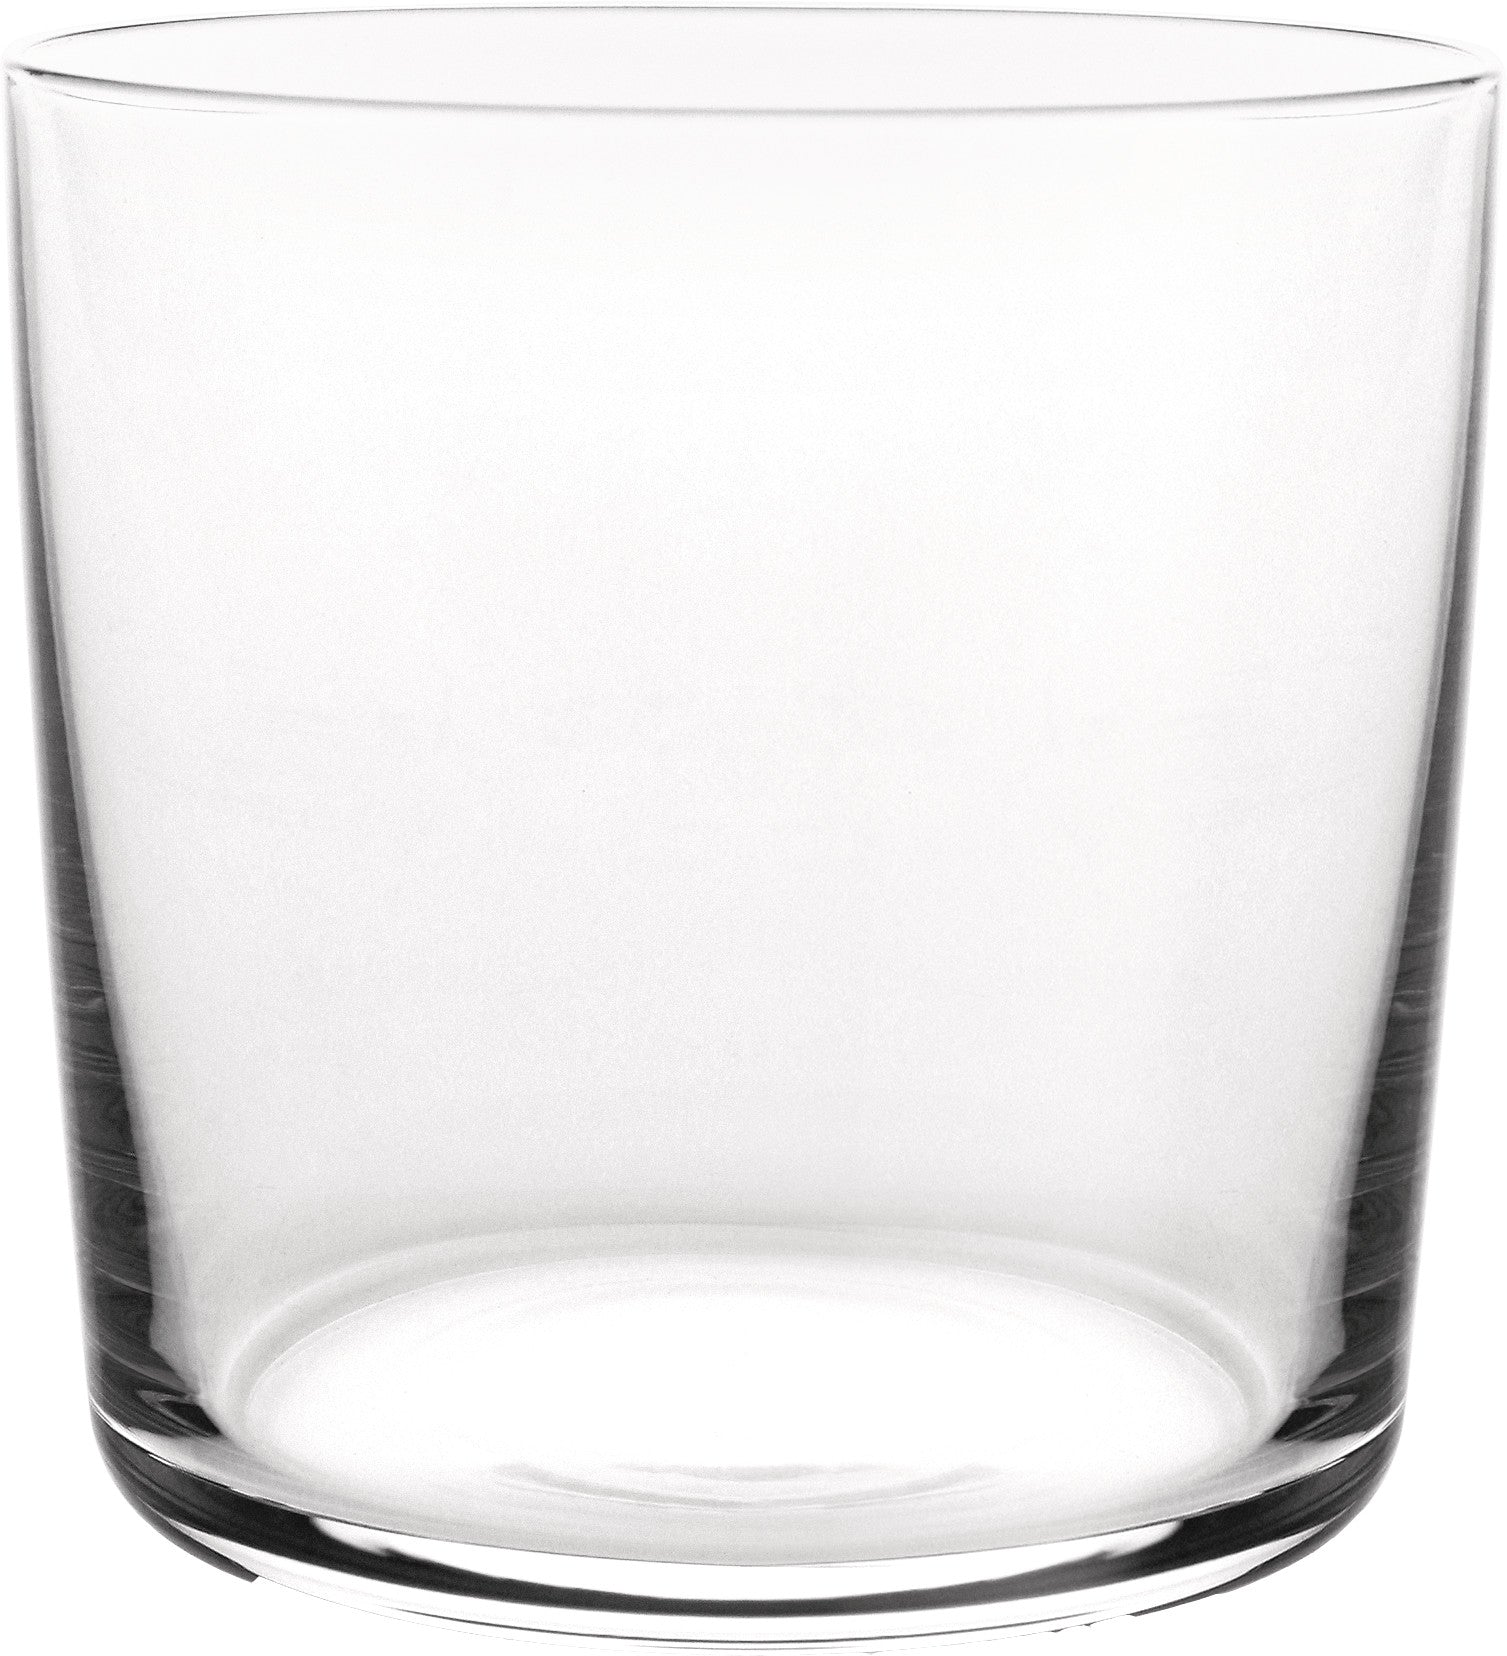 AJM29/41 Glass Family 4 Pcs/Pack — Glass water / long drink